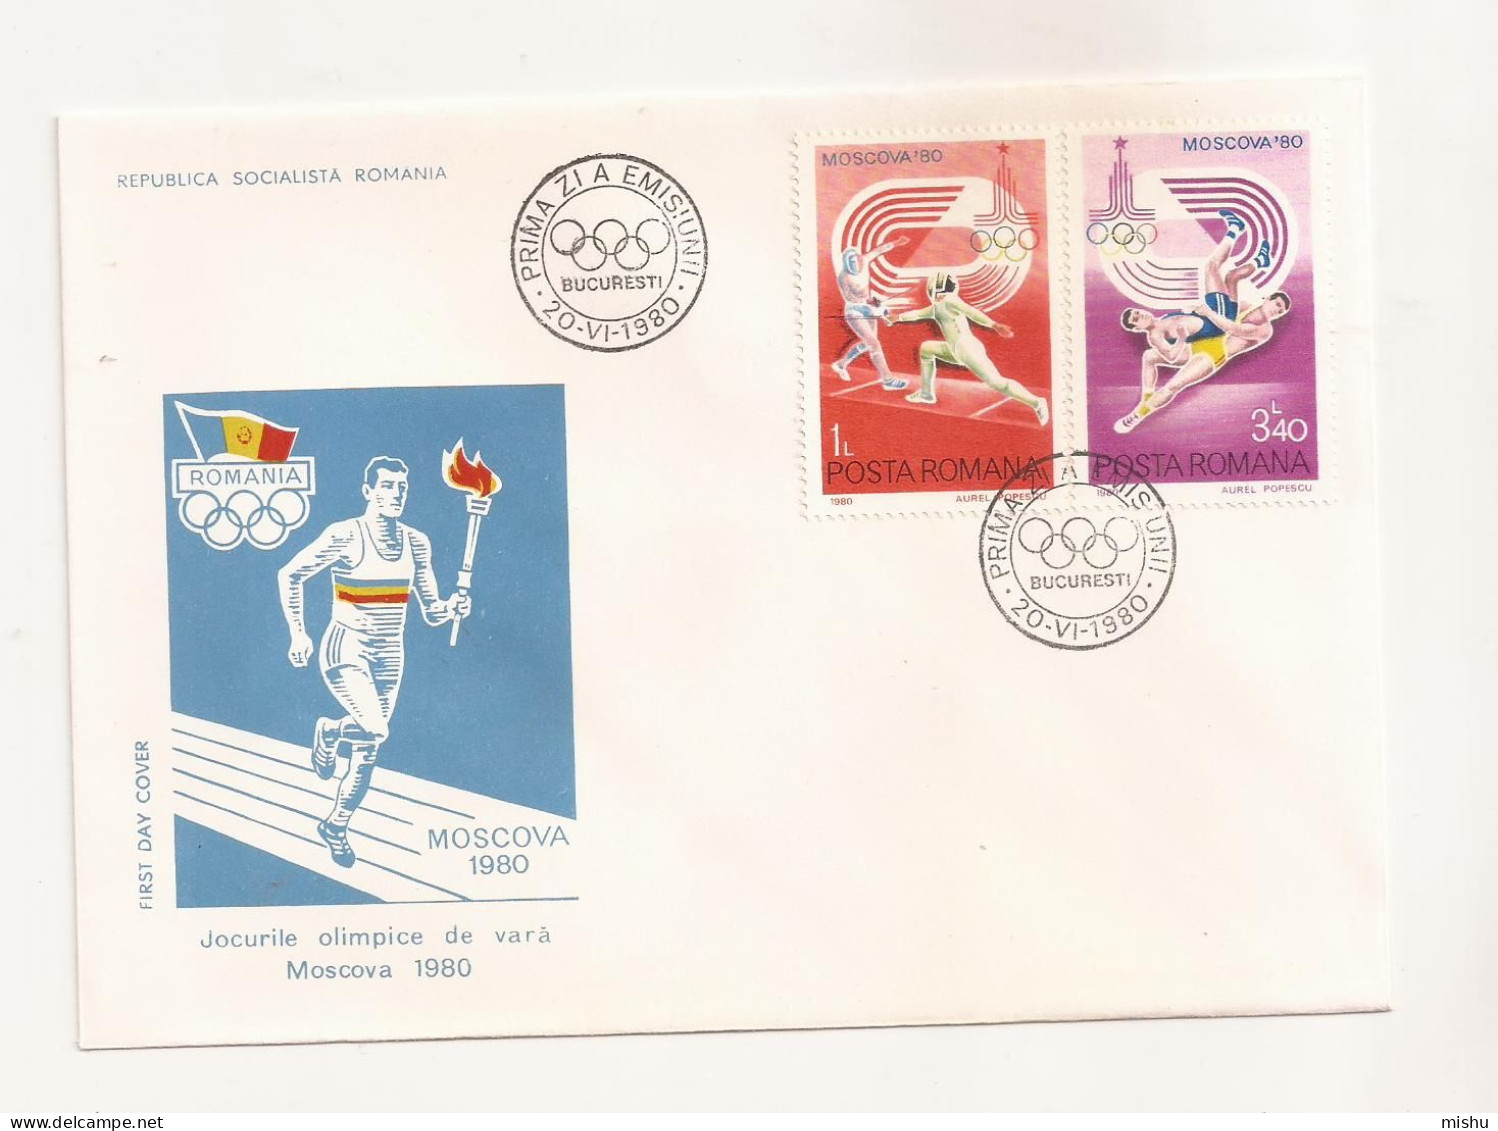 P1 Plic FDC ROMANIA - Prima Zi A Emisiunii -Jocurile Olimpice De Vara Moscova 1980 - Necirculat - First Day Cover - FDC